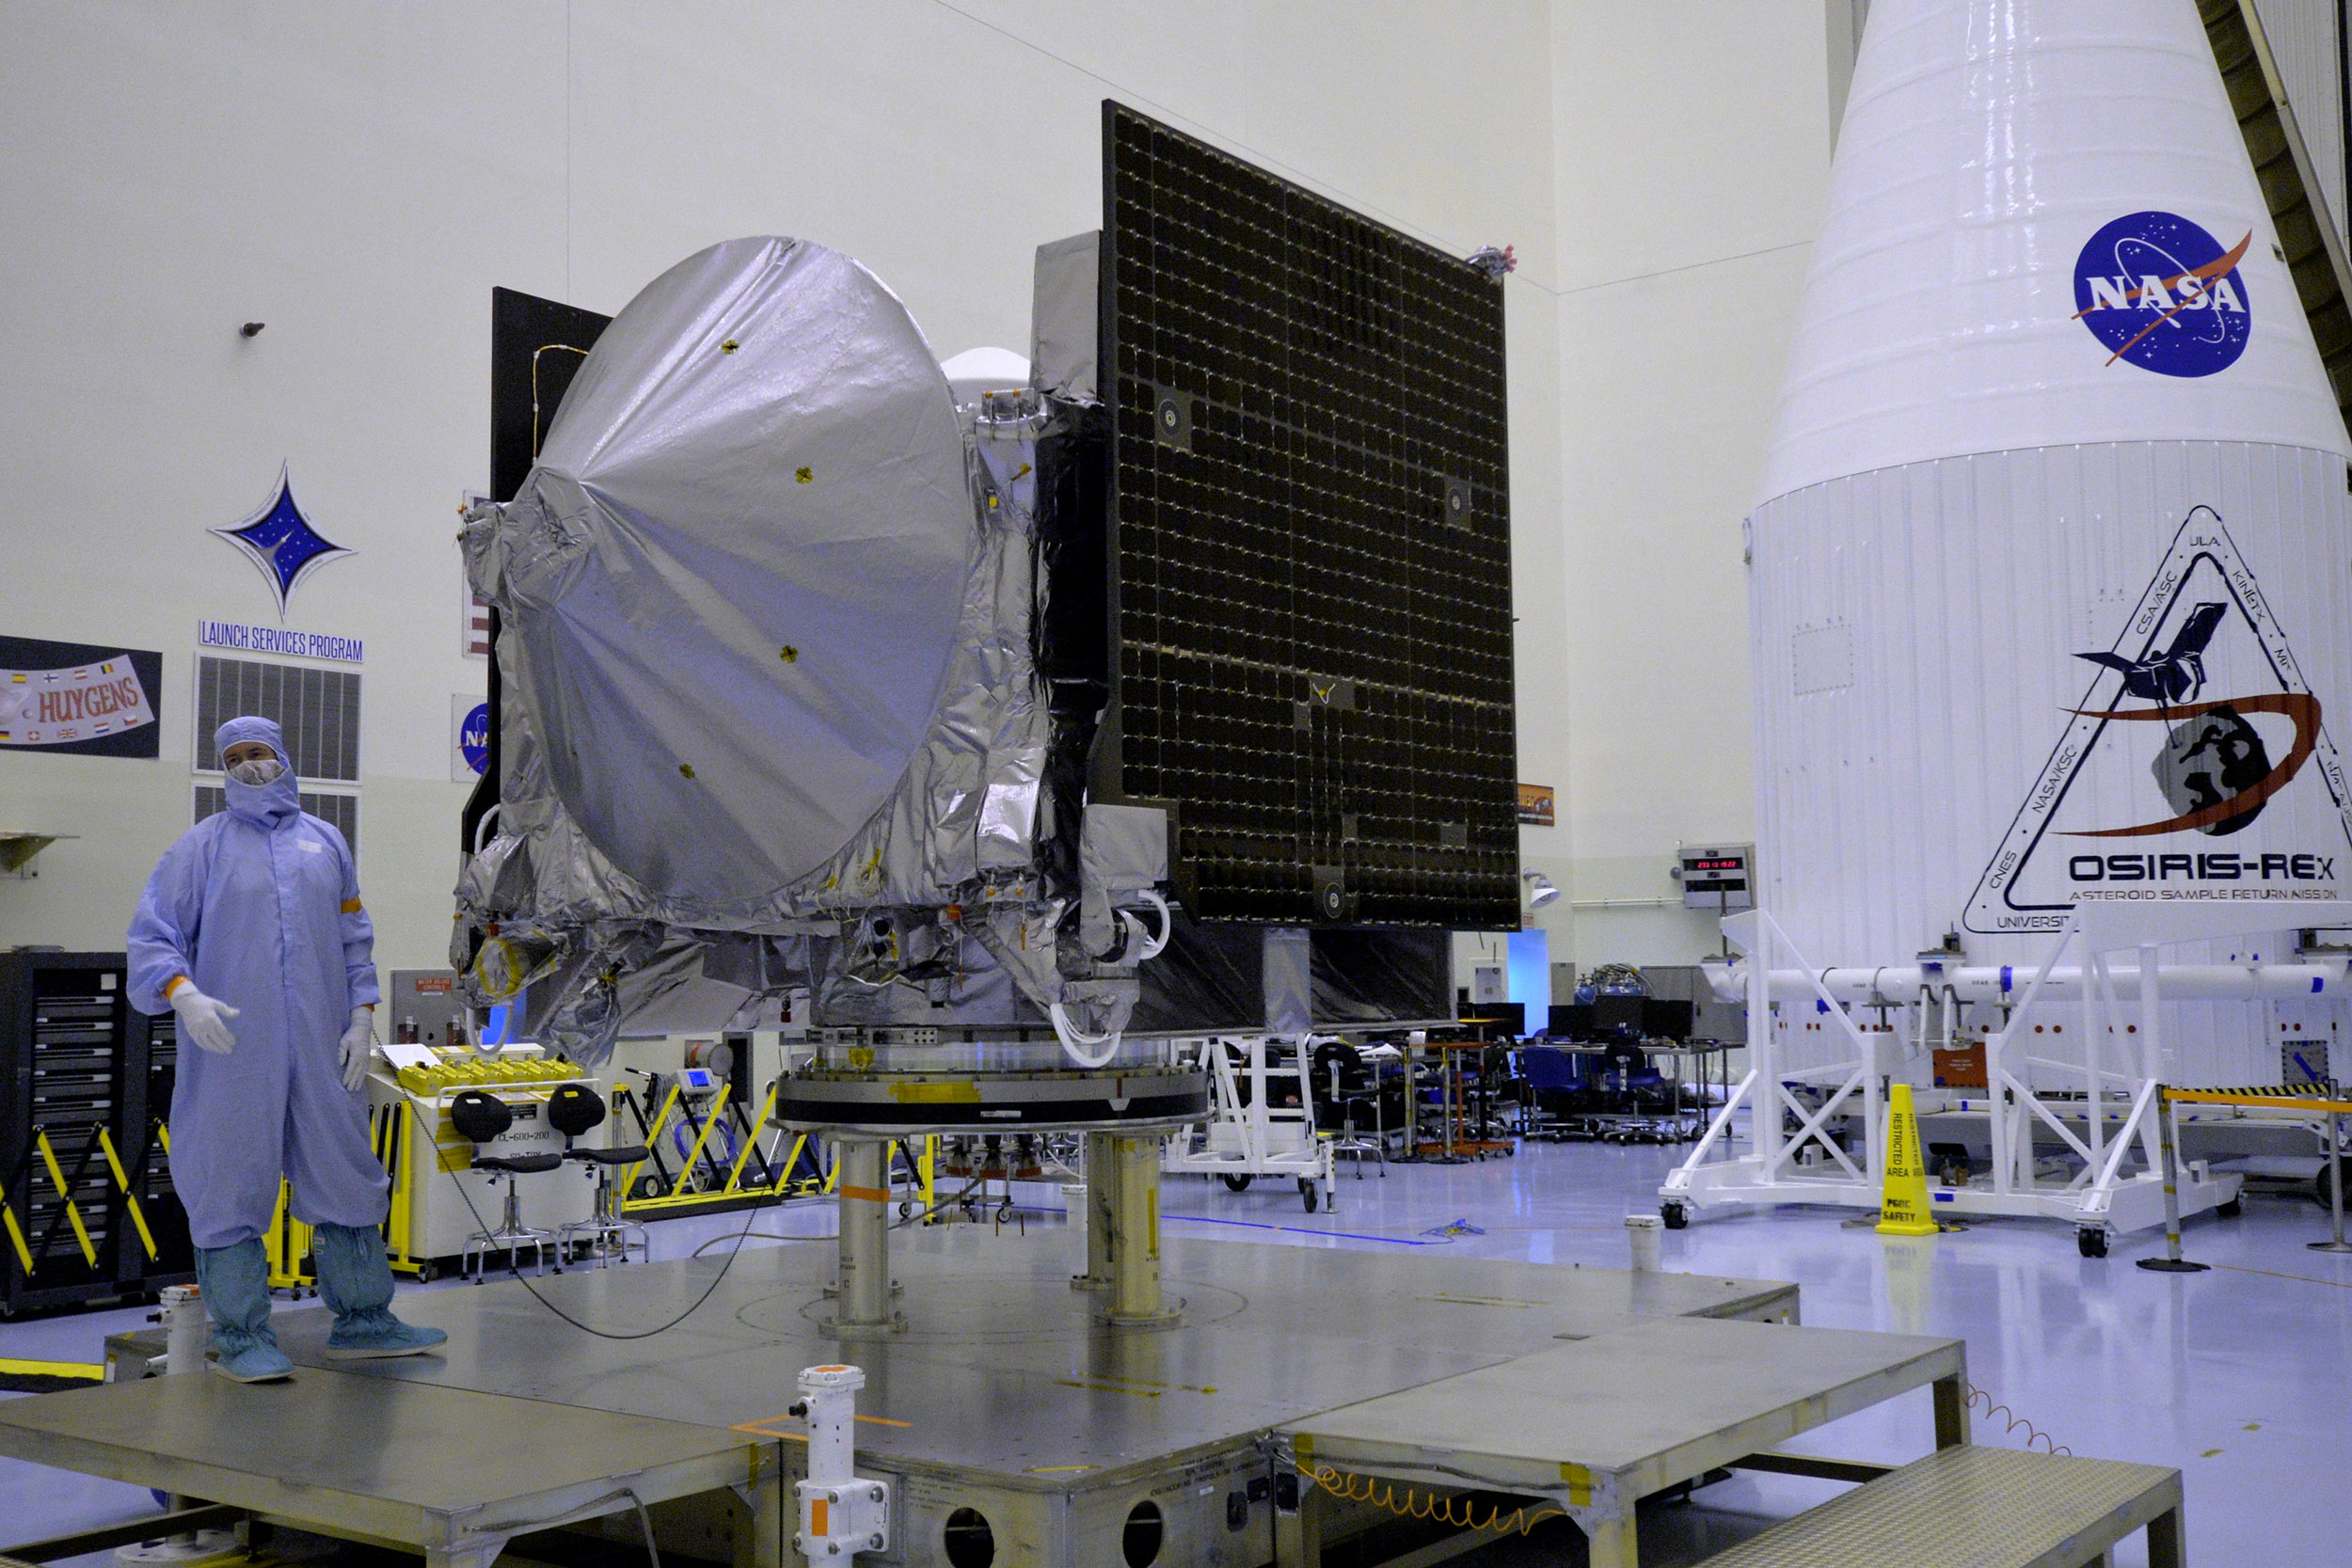 The OSIRIS-REx spacecraft resides in cleanroom as it undergoes final preparations before encapsulation for launch aboard an Atlas V rocket on Sept. 8. Credit: Julian Leek/JNN